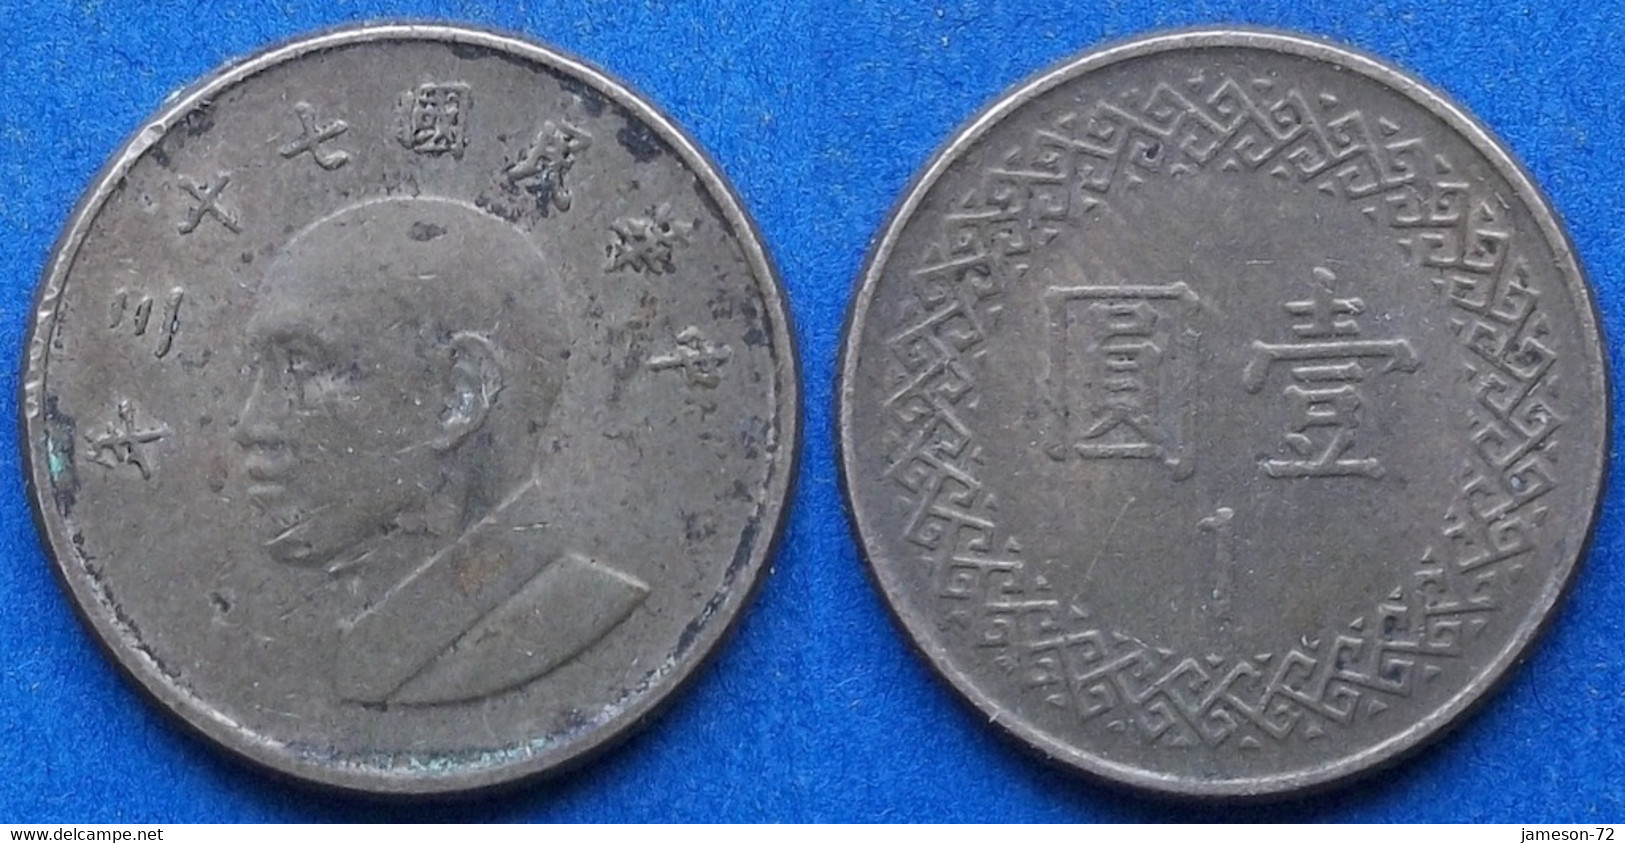 TAIWAN - 1 Yuan Year 73 (1984) Y# 551 Republic, Standard Coinage - Edelweiss Coins - Taiwan